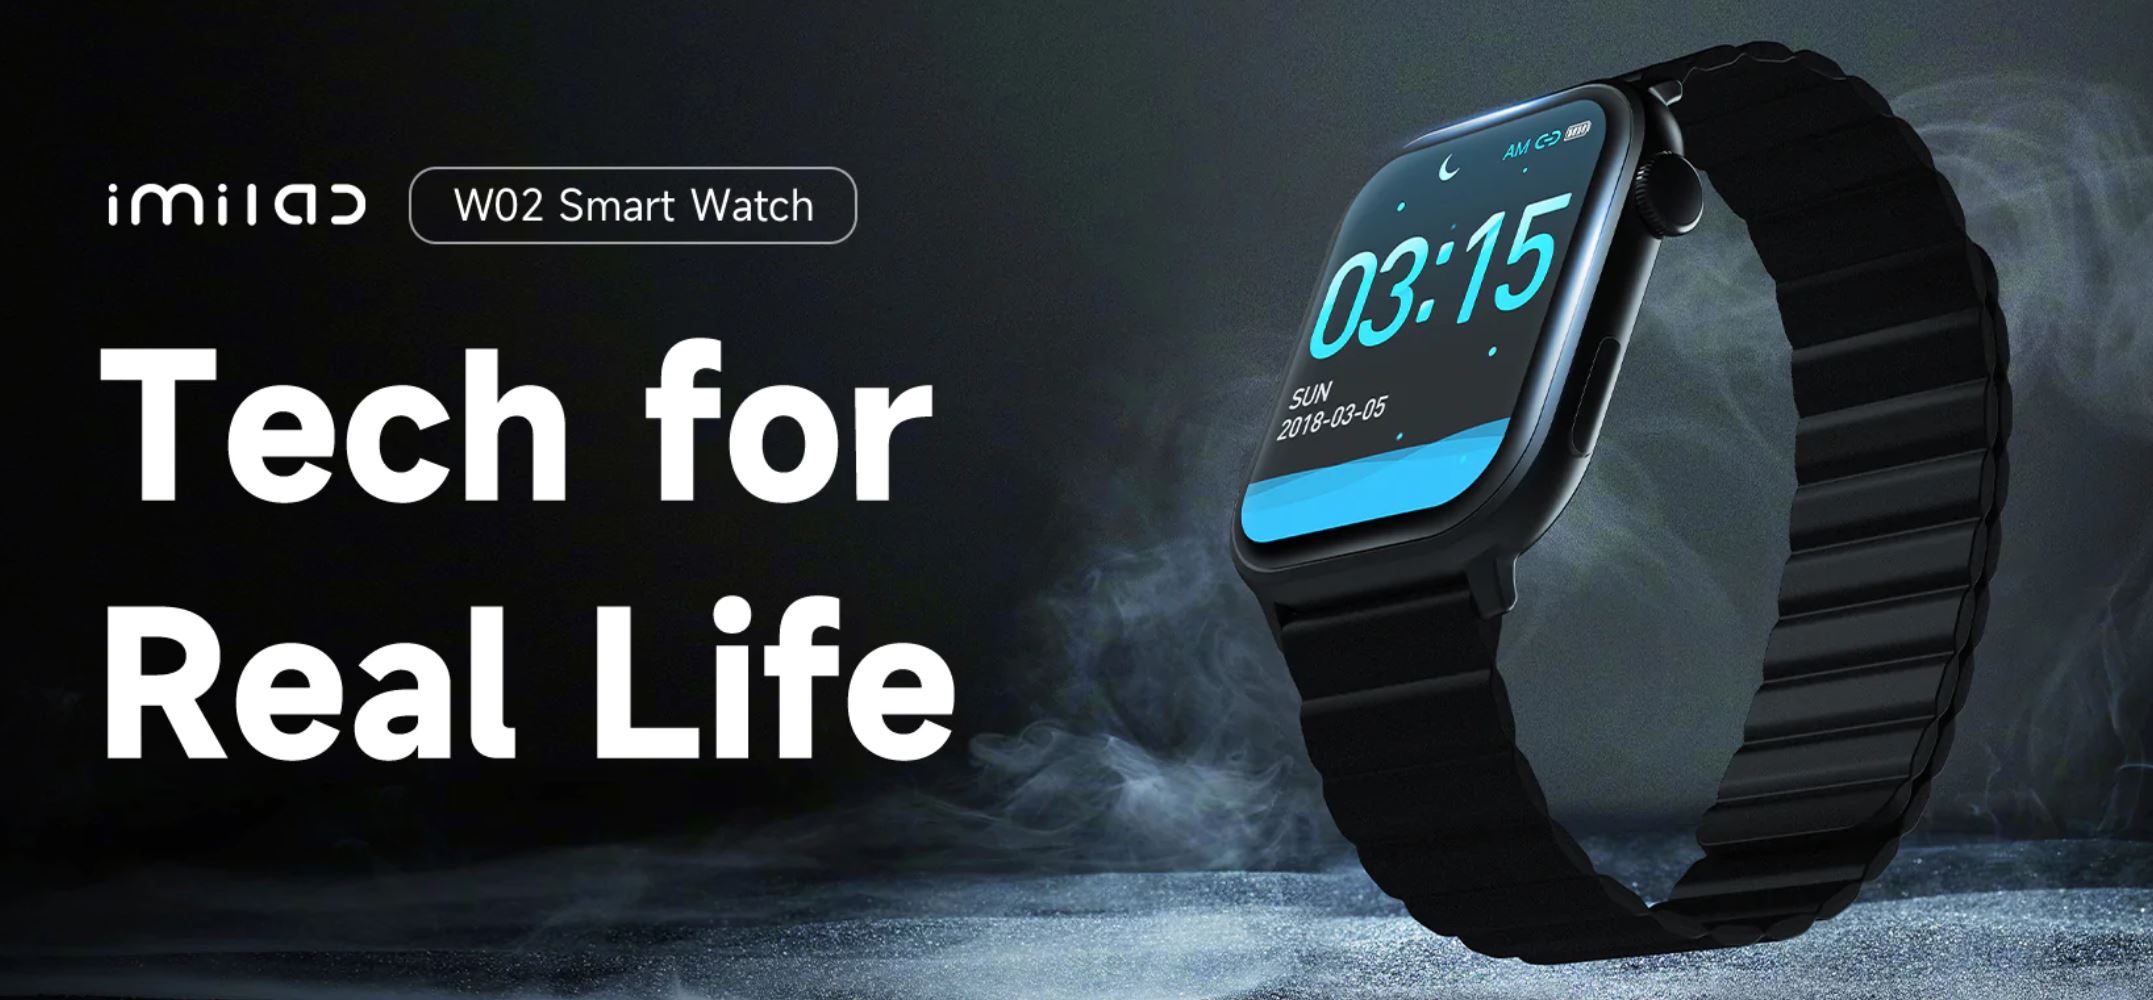 IMILAB W02 Calling Smart Watch